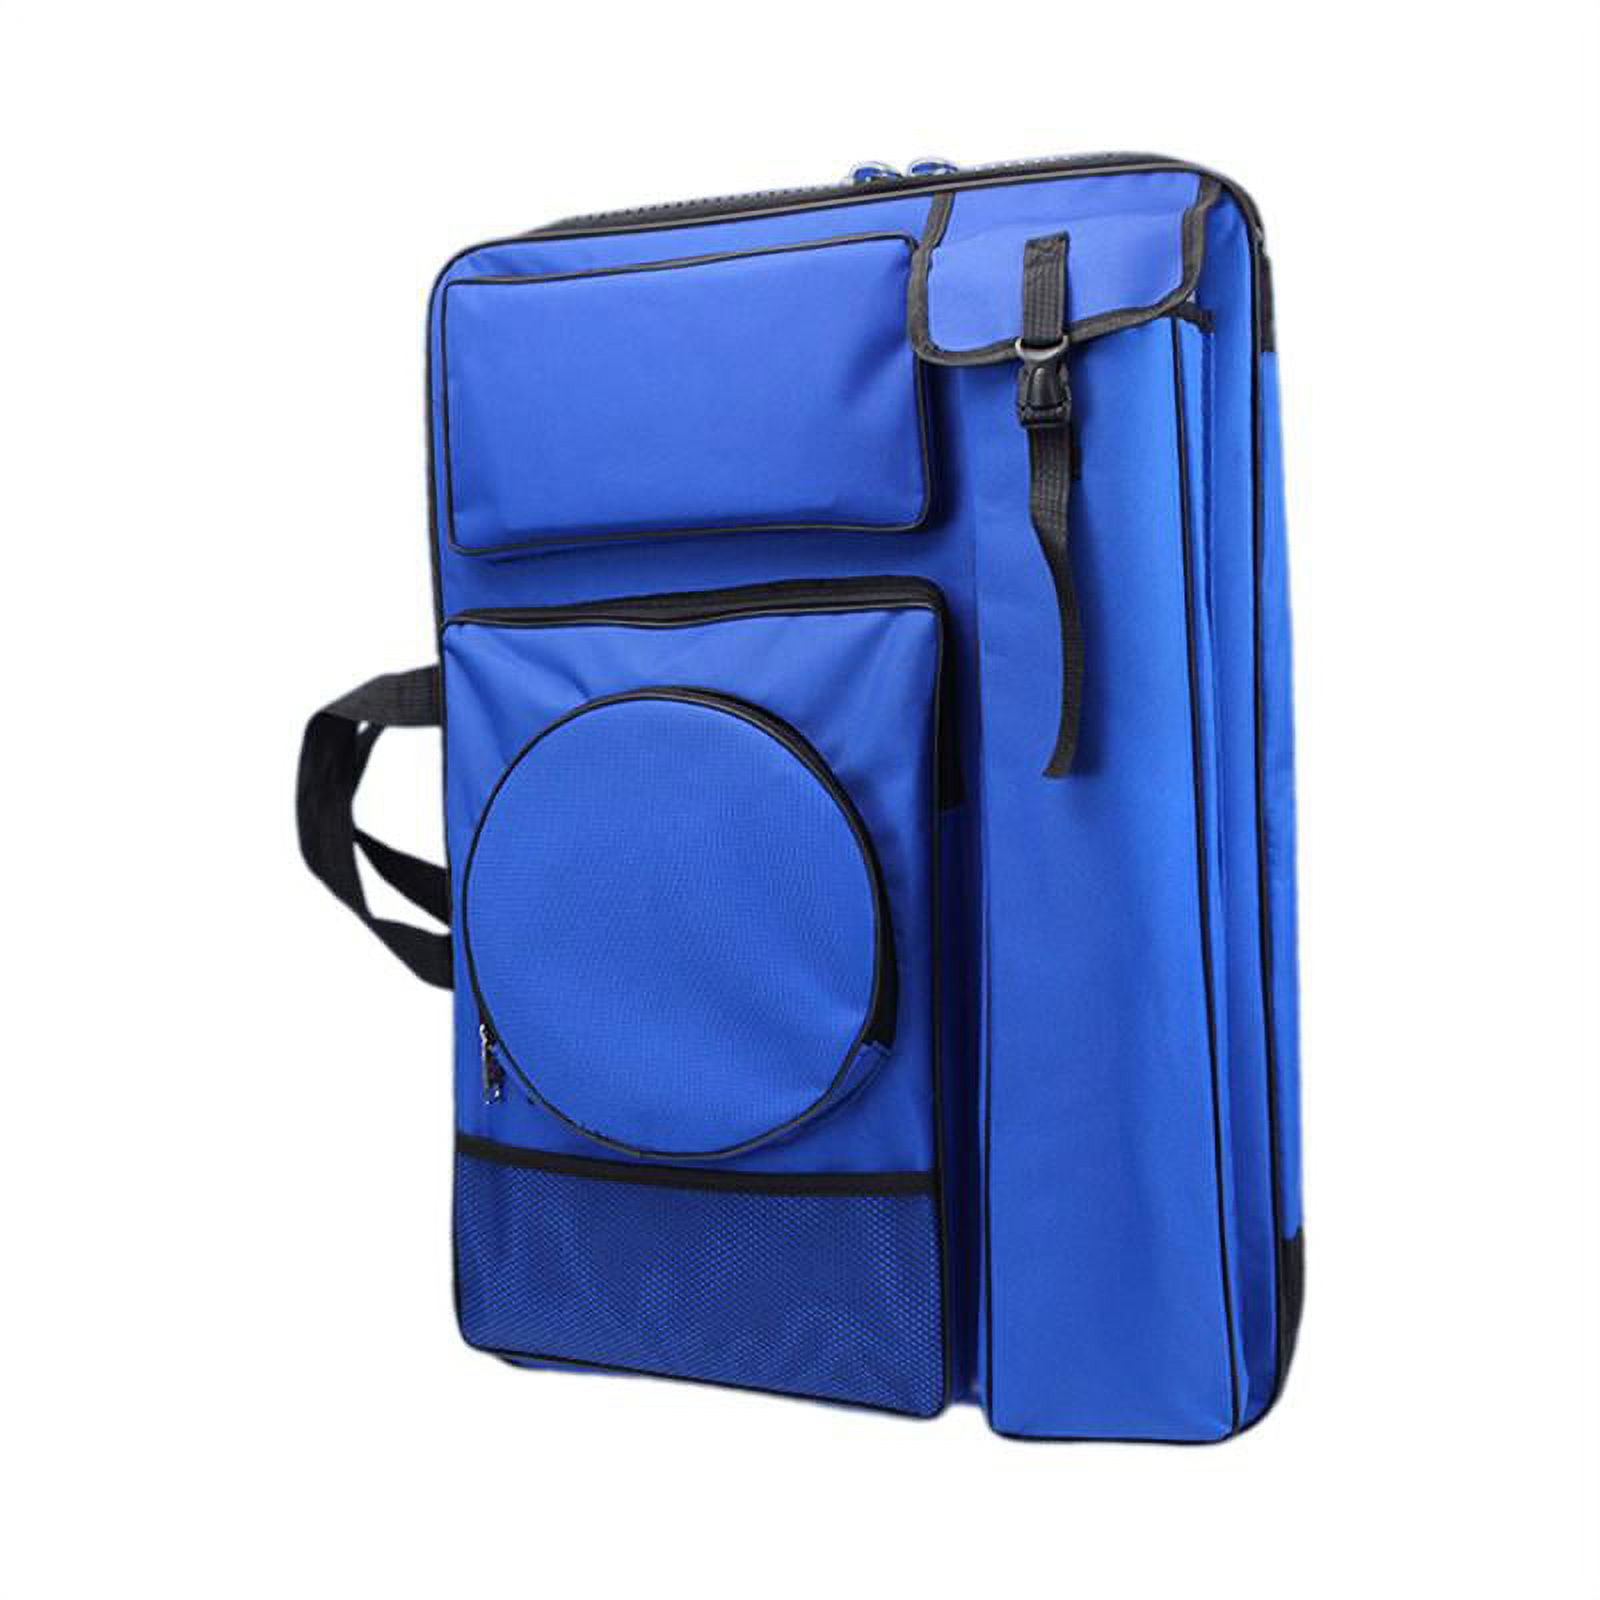 Art Portfolio Case,Art Portfolio Bags Carry Case Art Supplies Tote, Backpack Bag with Pockets Handle Organizer,Student Carrying Storage Bag Artwork